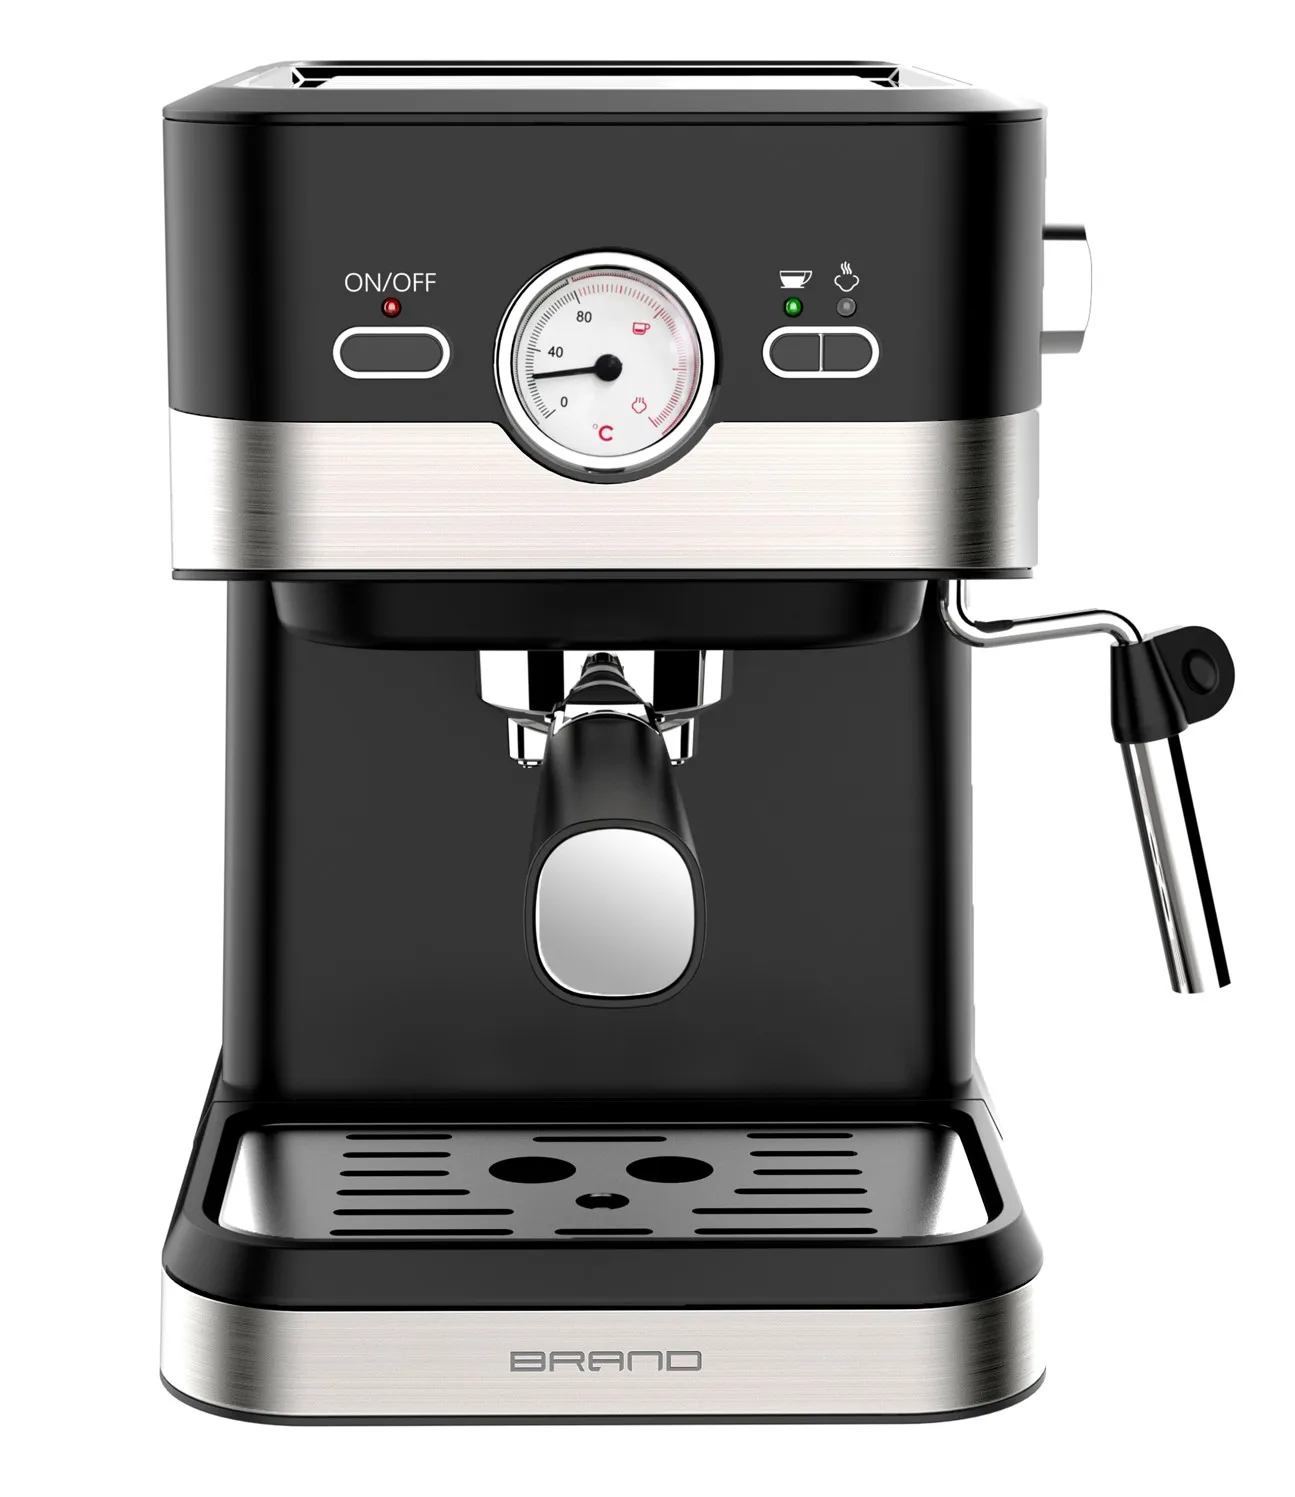 Electric Italian Coffee Machine Maker 15bar Pump Pressure with